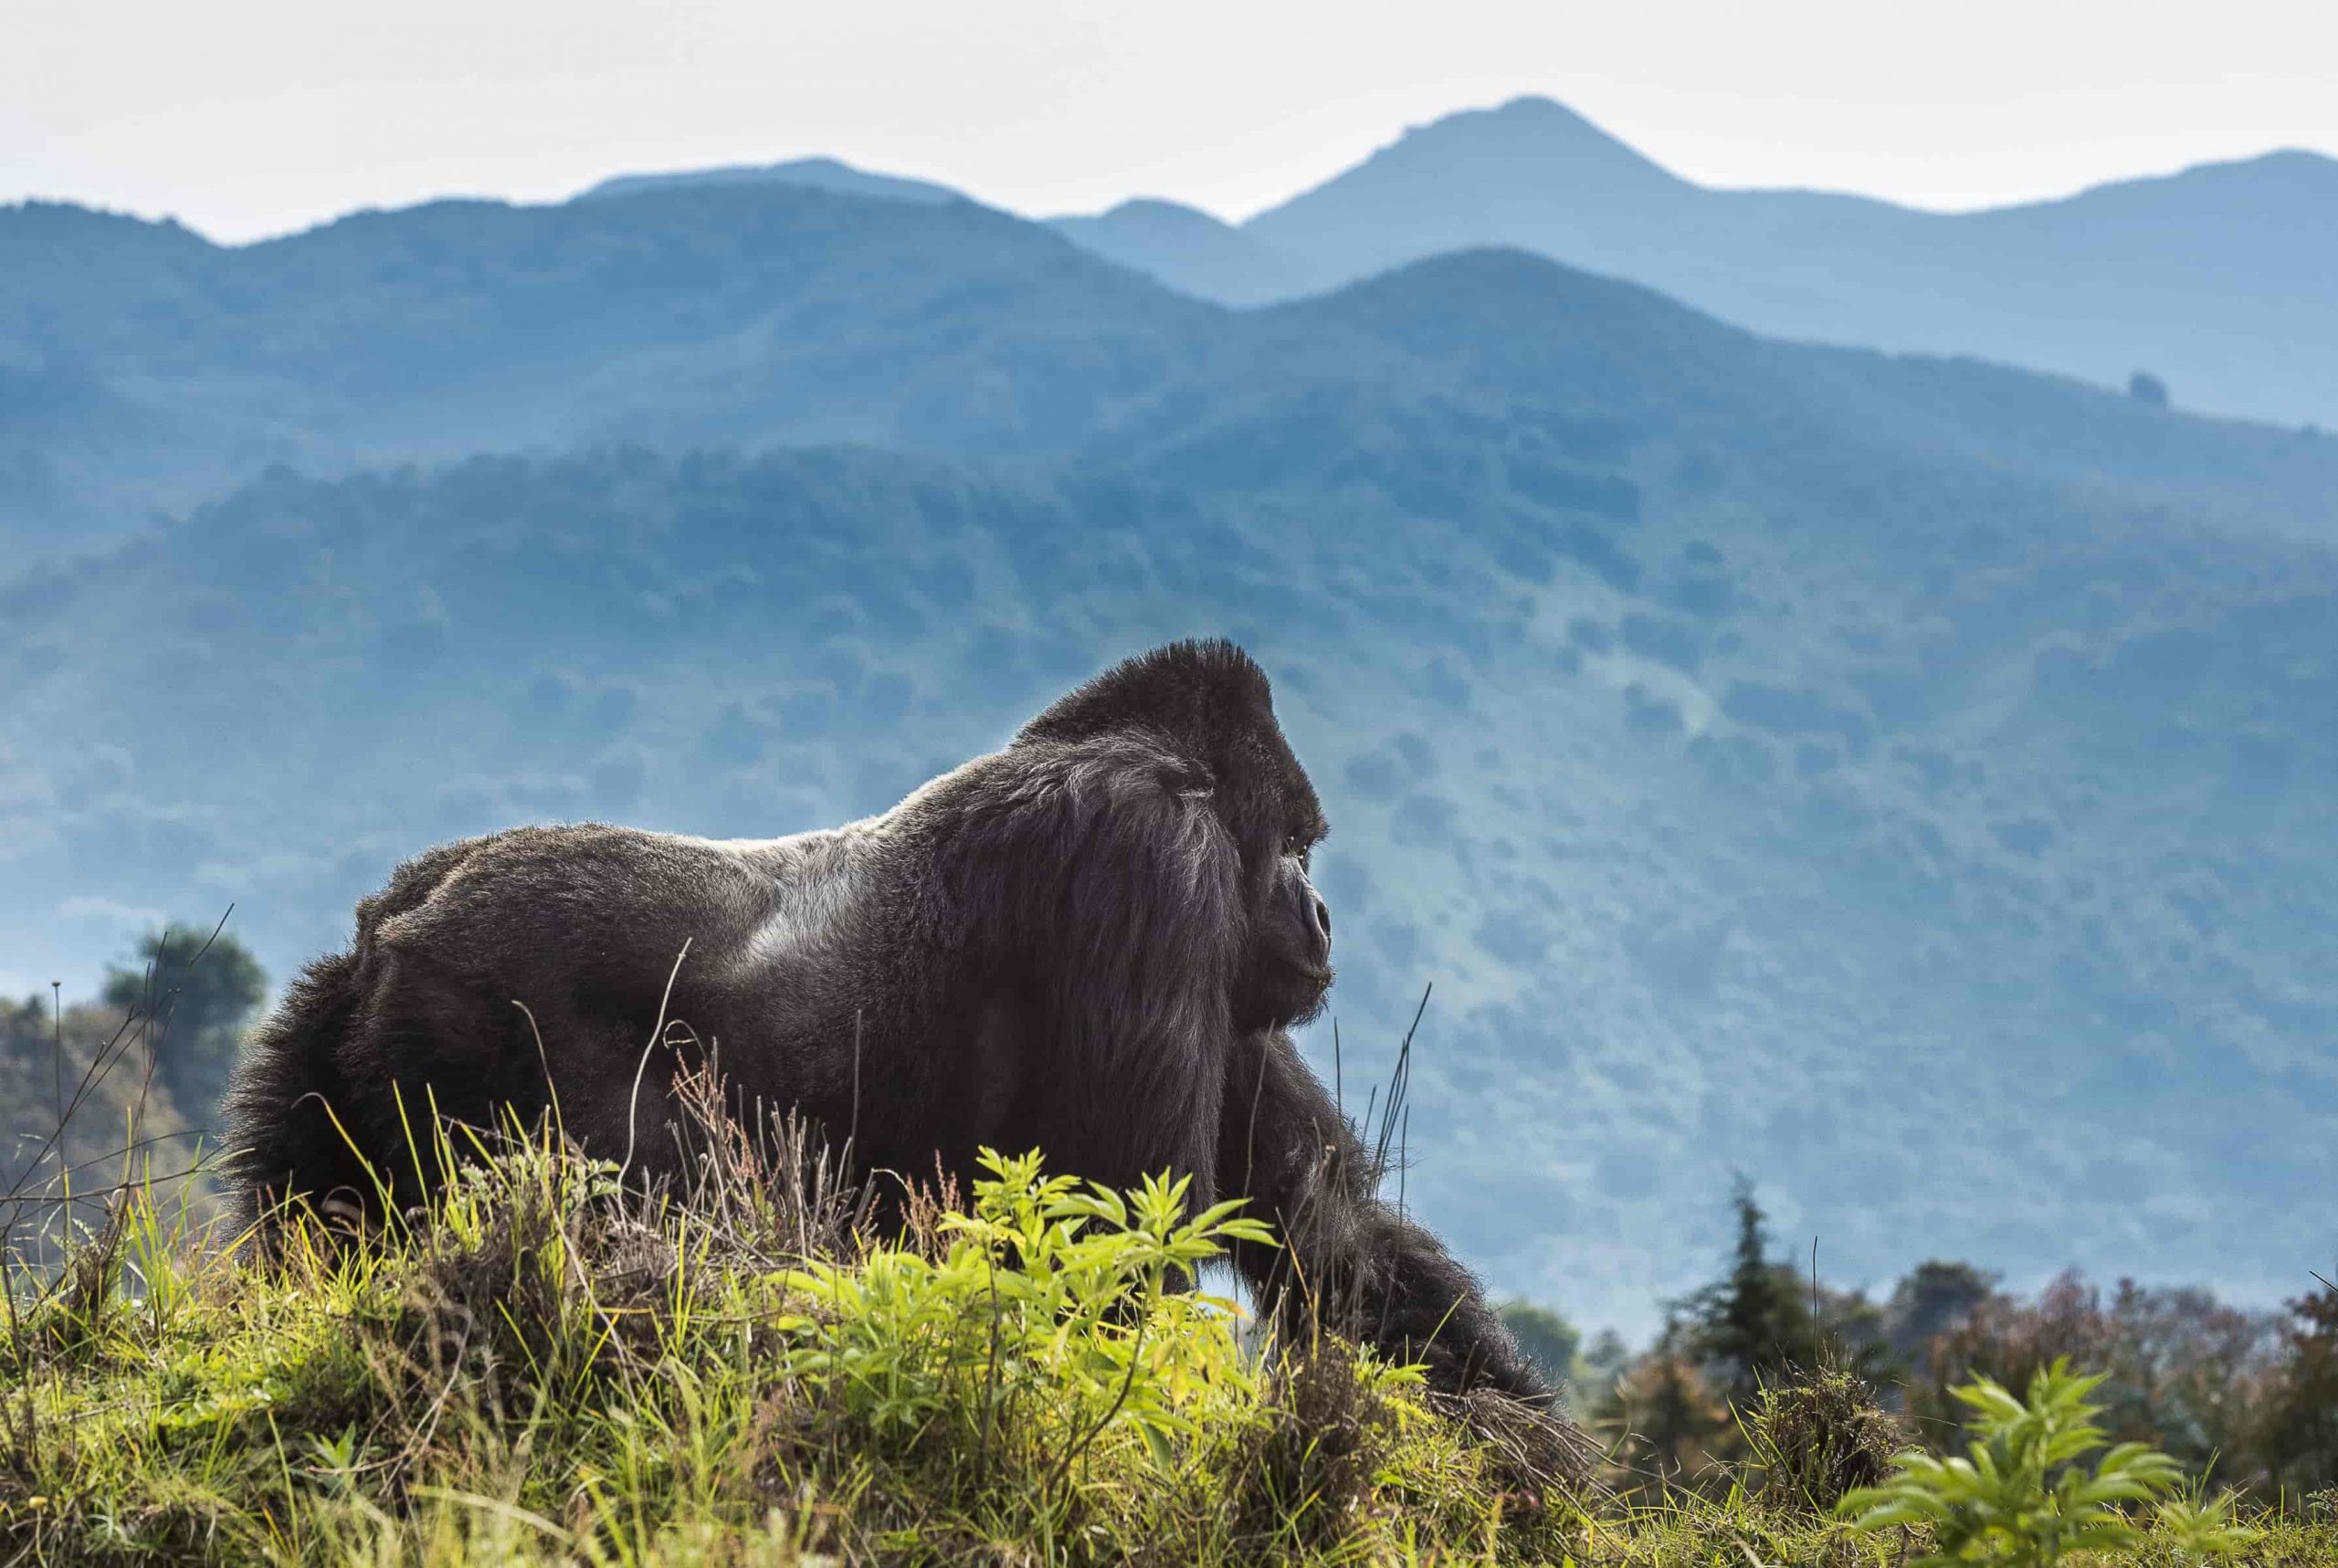 What to consider while planning a gorilla trekking safari to Rwanda